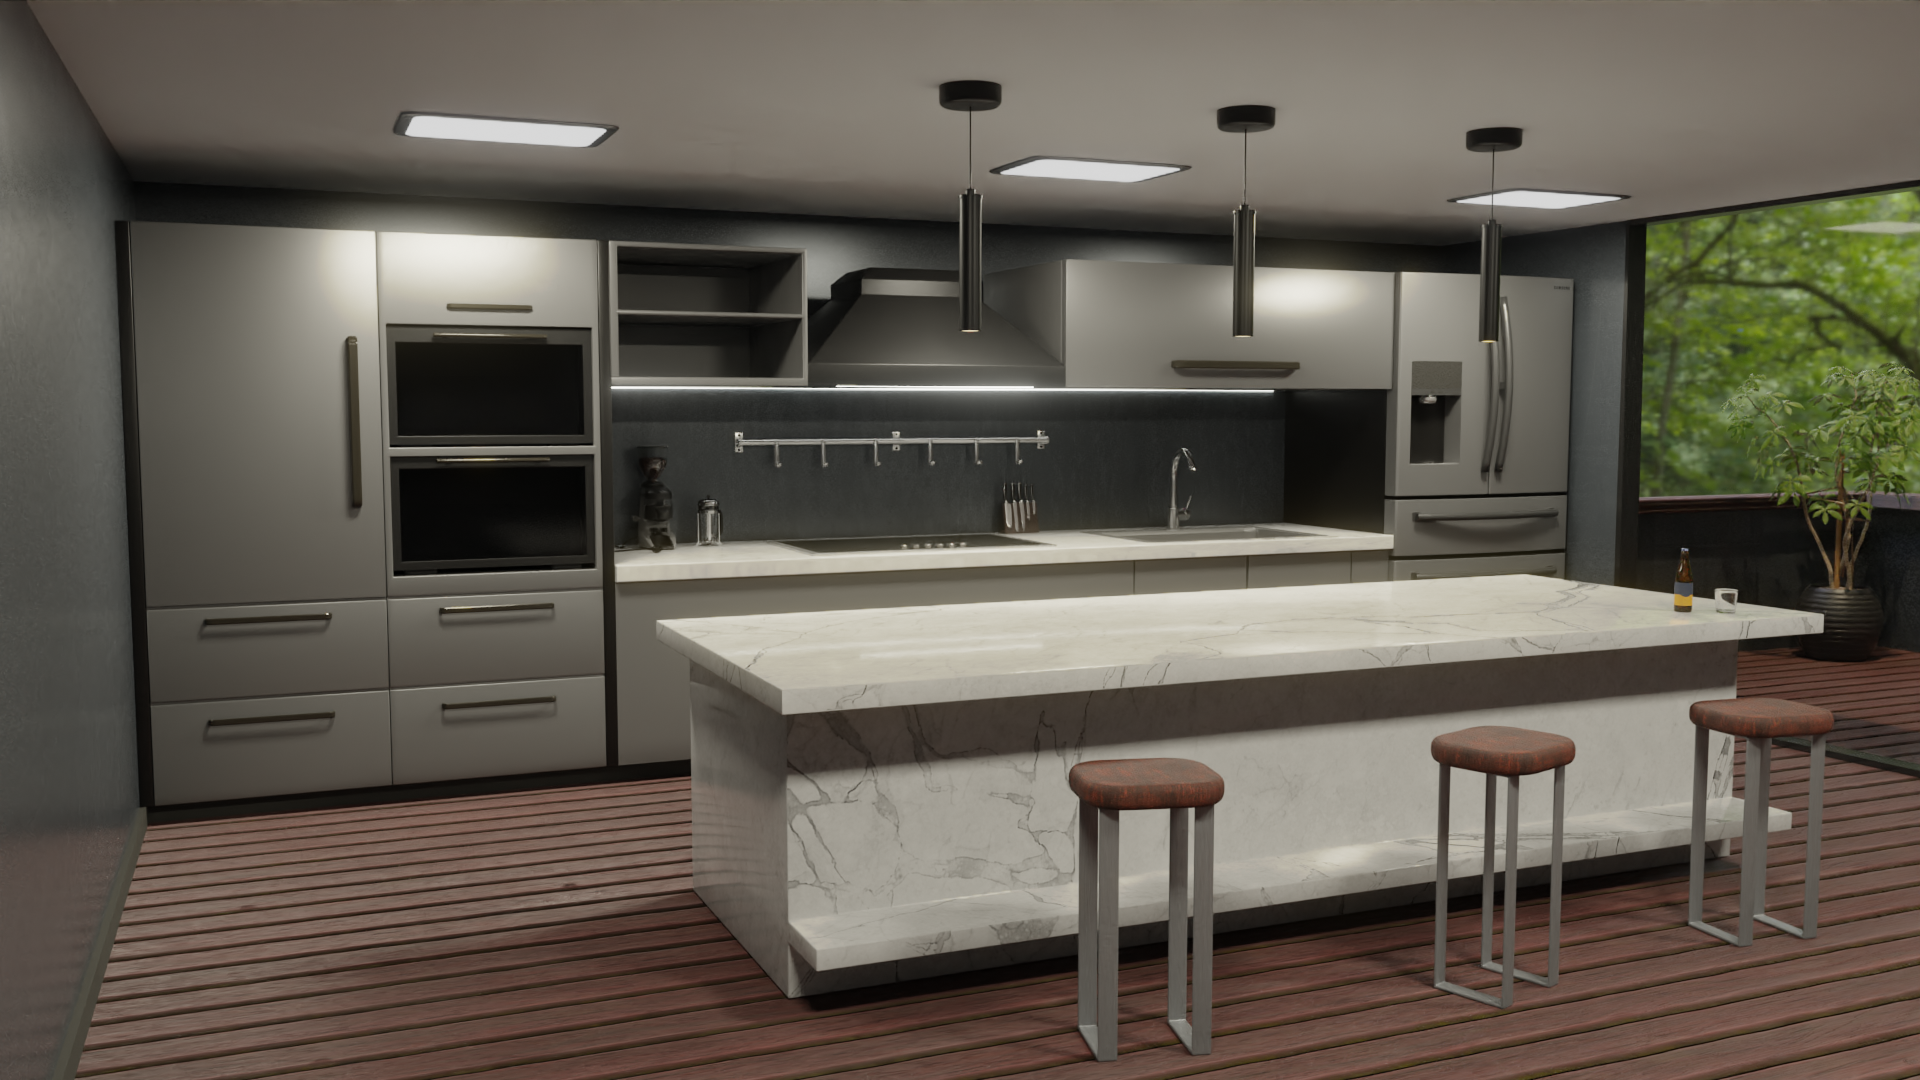 Kitchen interior design preview image 4